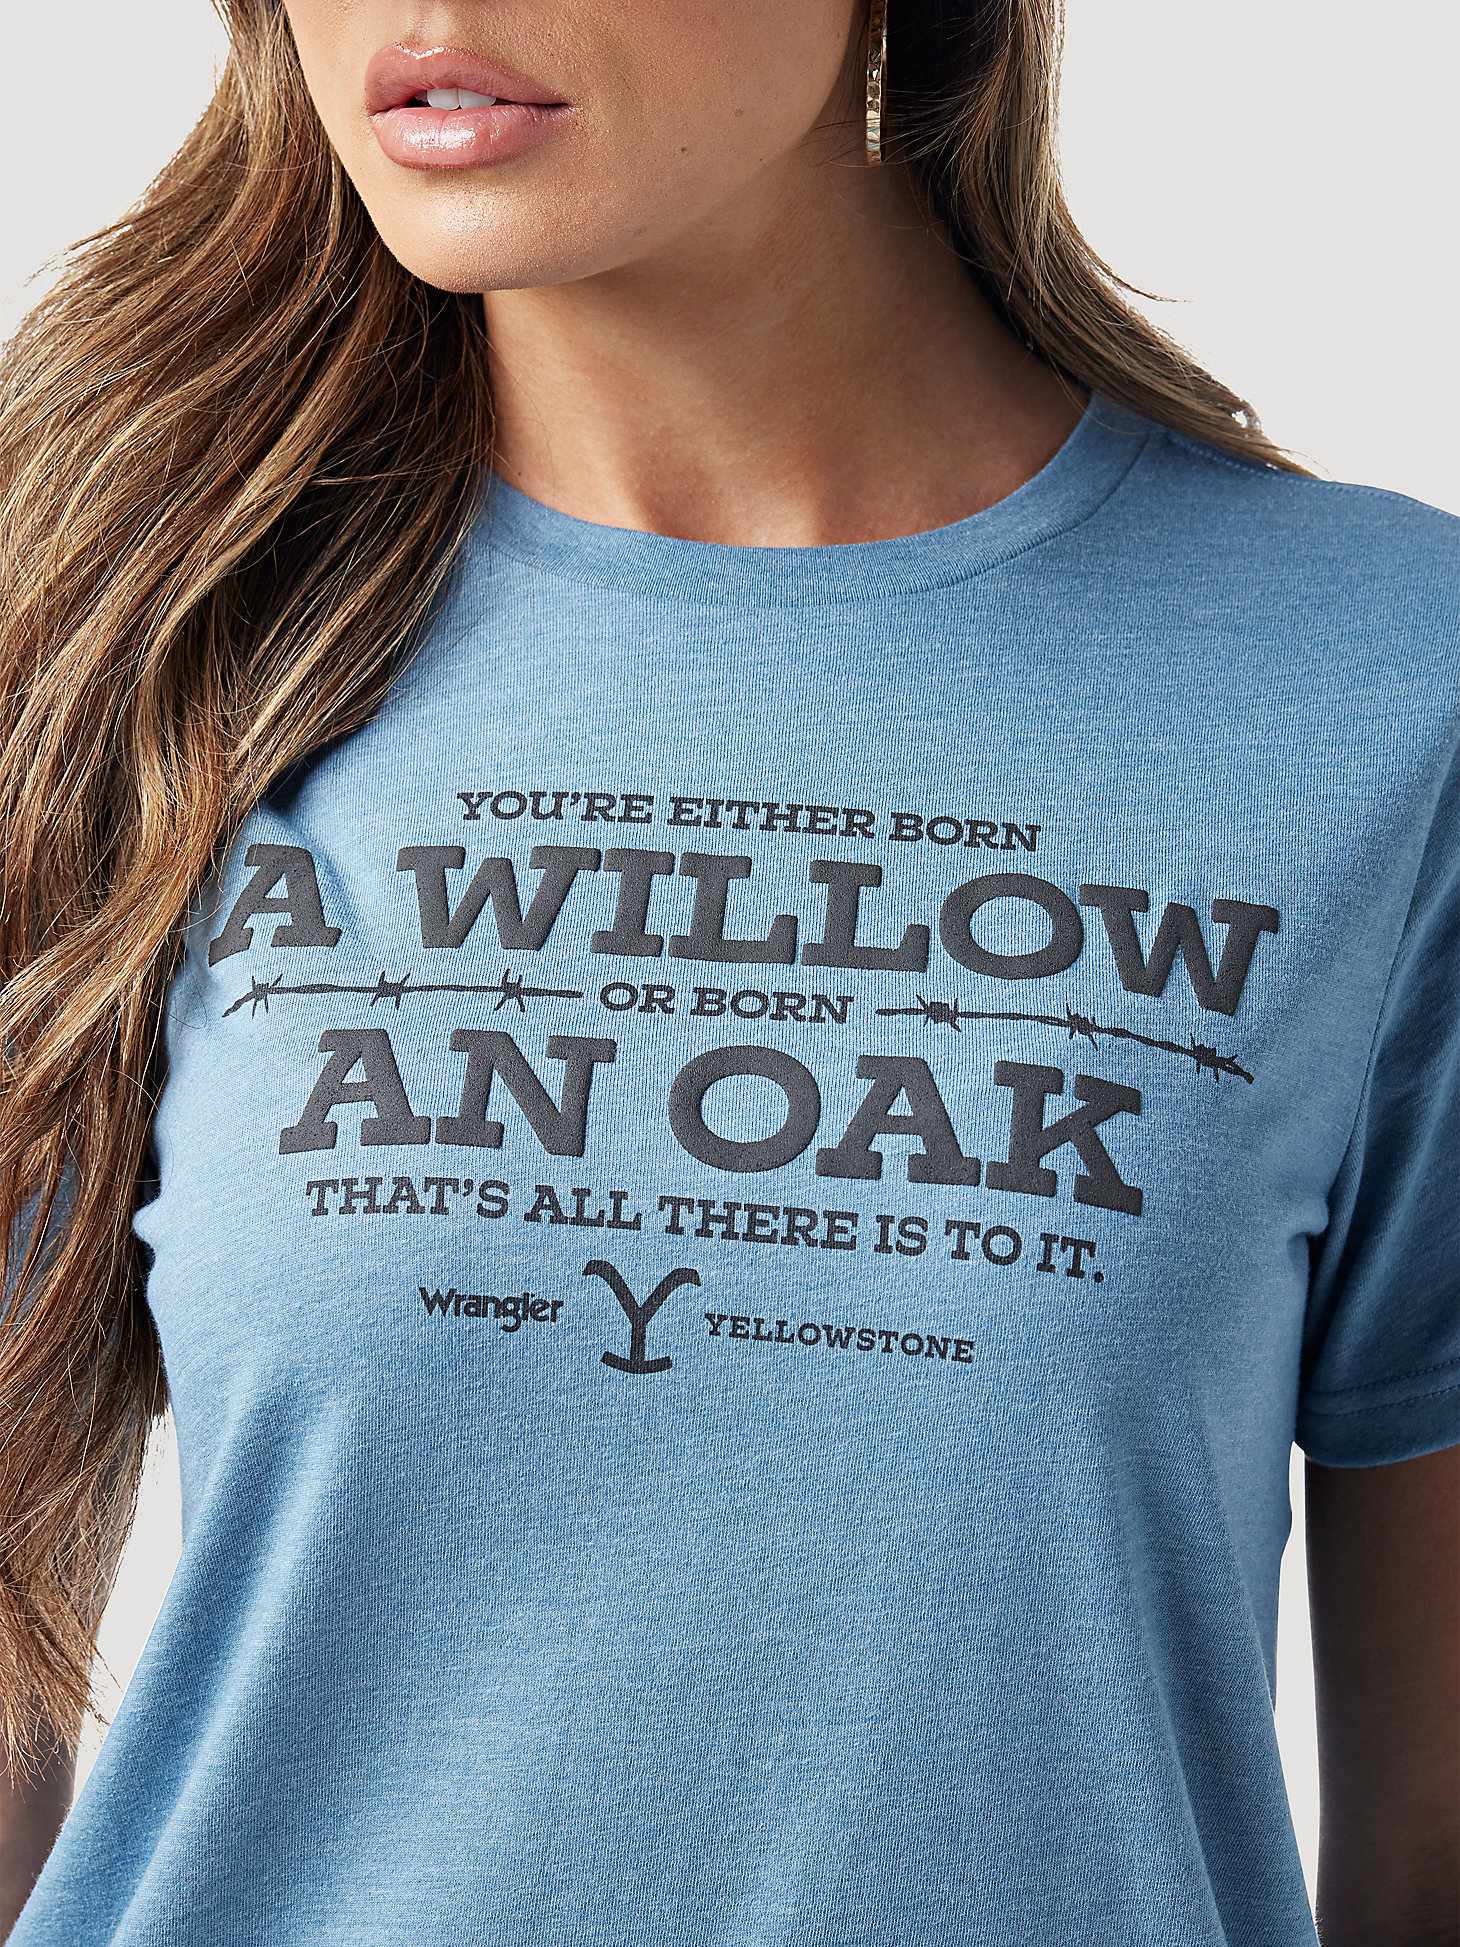 Wrangler x Yellowstone Women's Willow Or Oak Short Sleeve Tee in Medium Blue alternative view 1